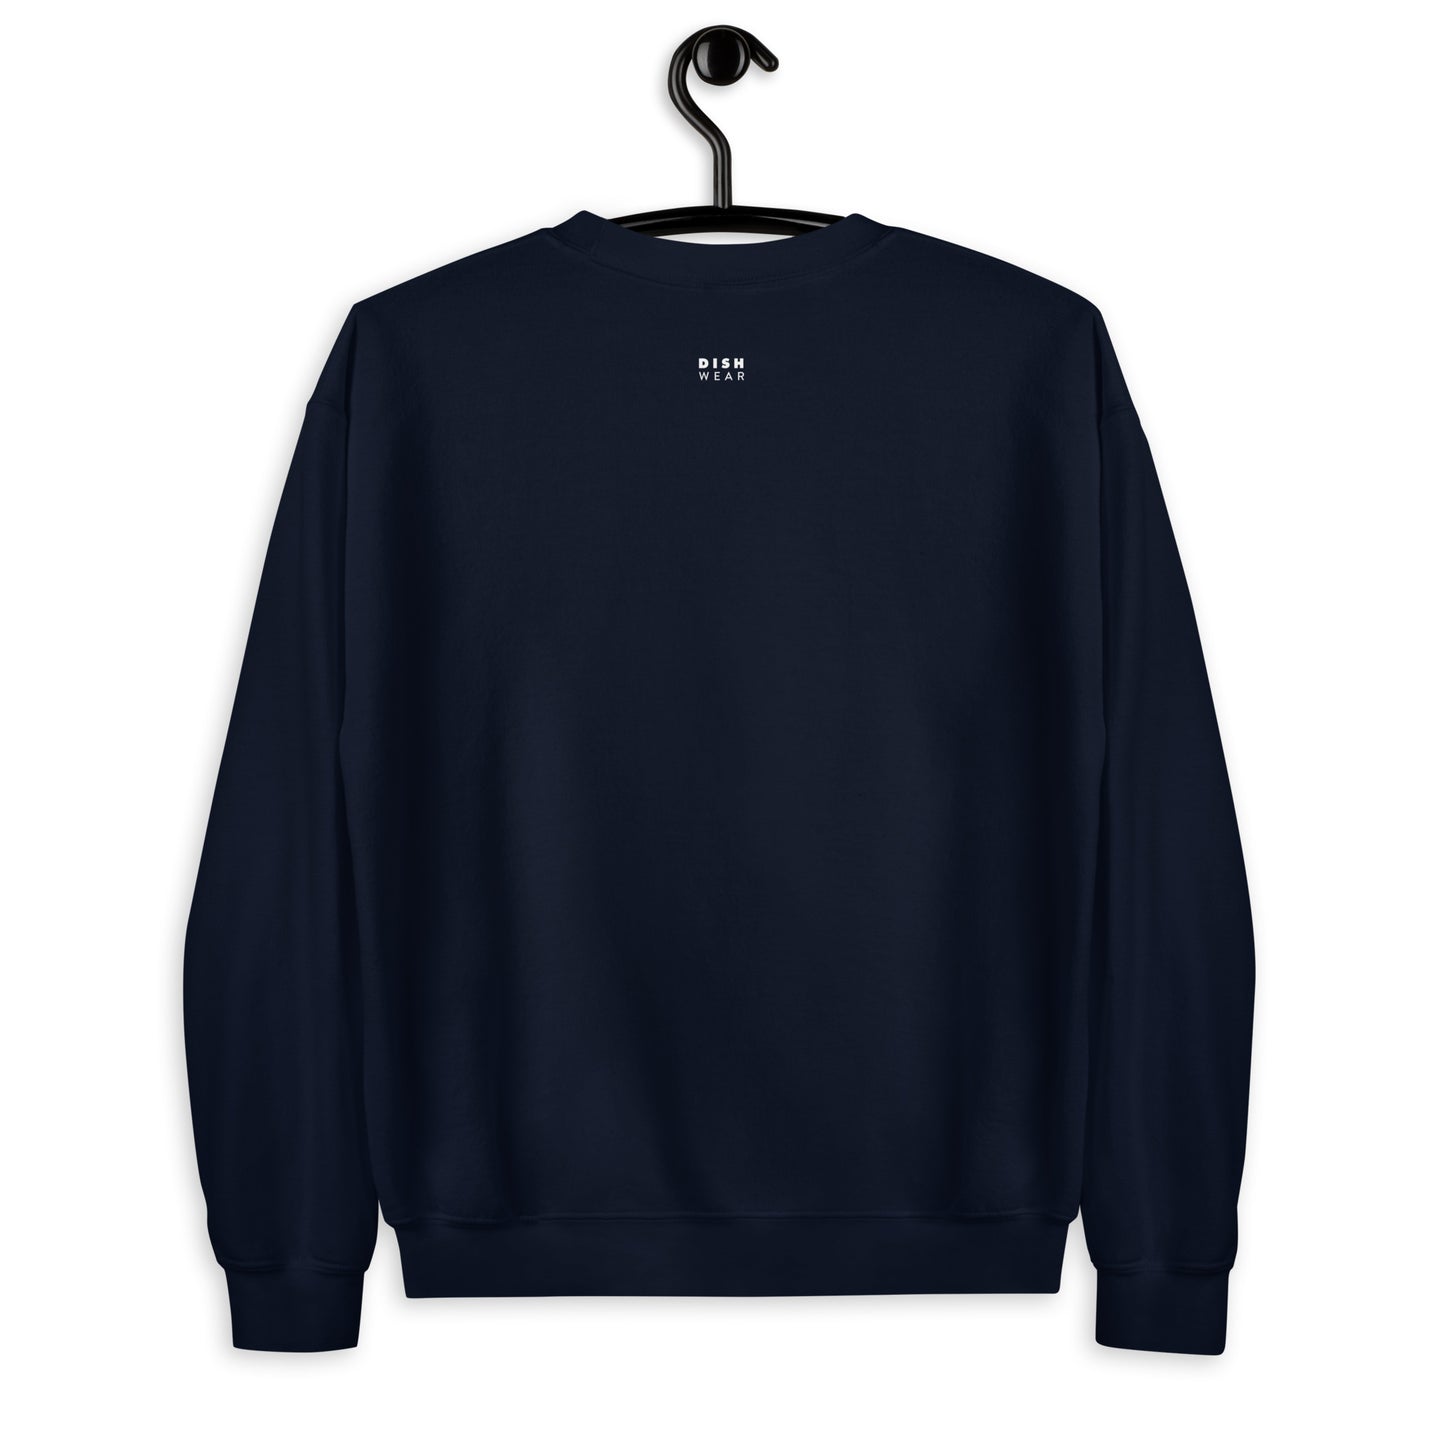 Rye Bread Sweatshirt - Straight Font